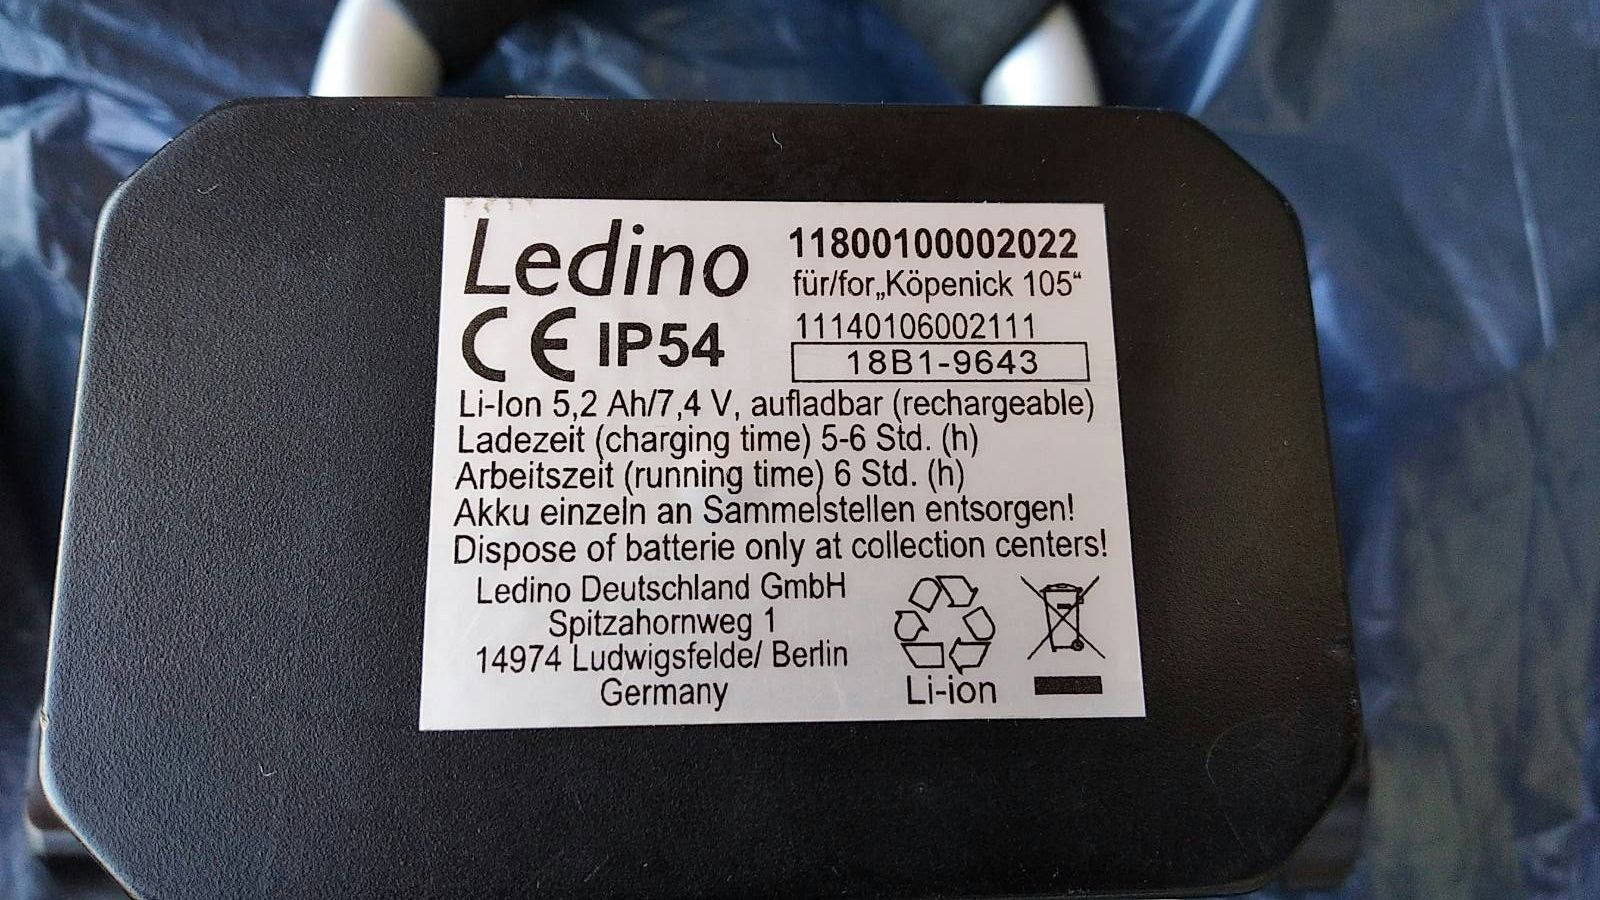 Ledino LED аккумуляторный светильник 10W Köpenick 105, 5.2 Ah